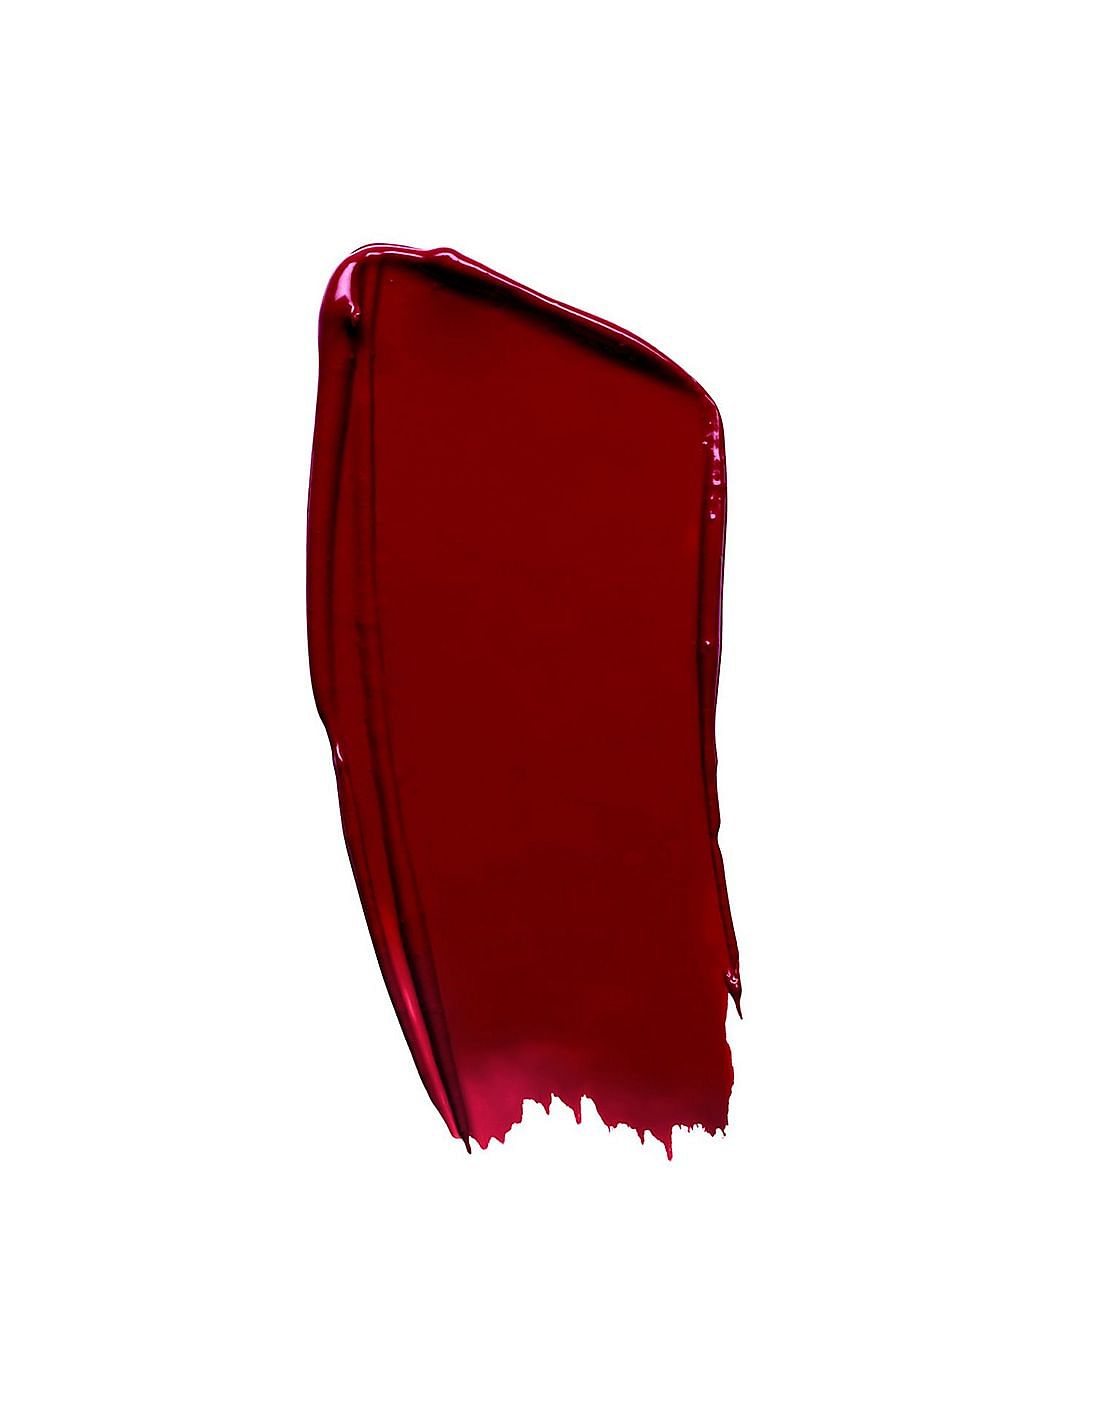 Pure Color Desire Rouge Excess Matte Lipstick  On 4 Gr